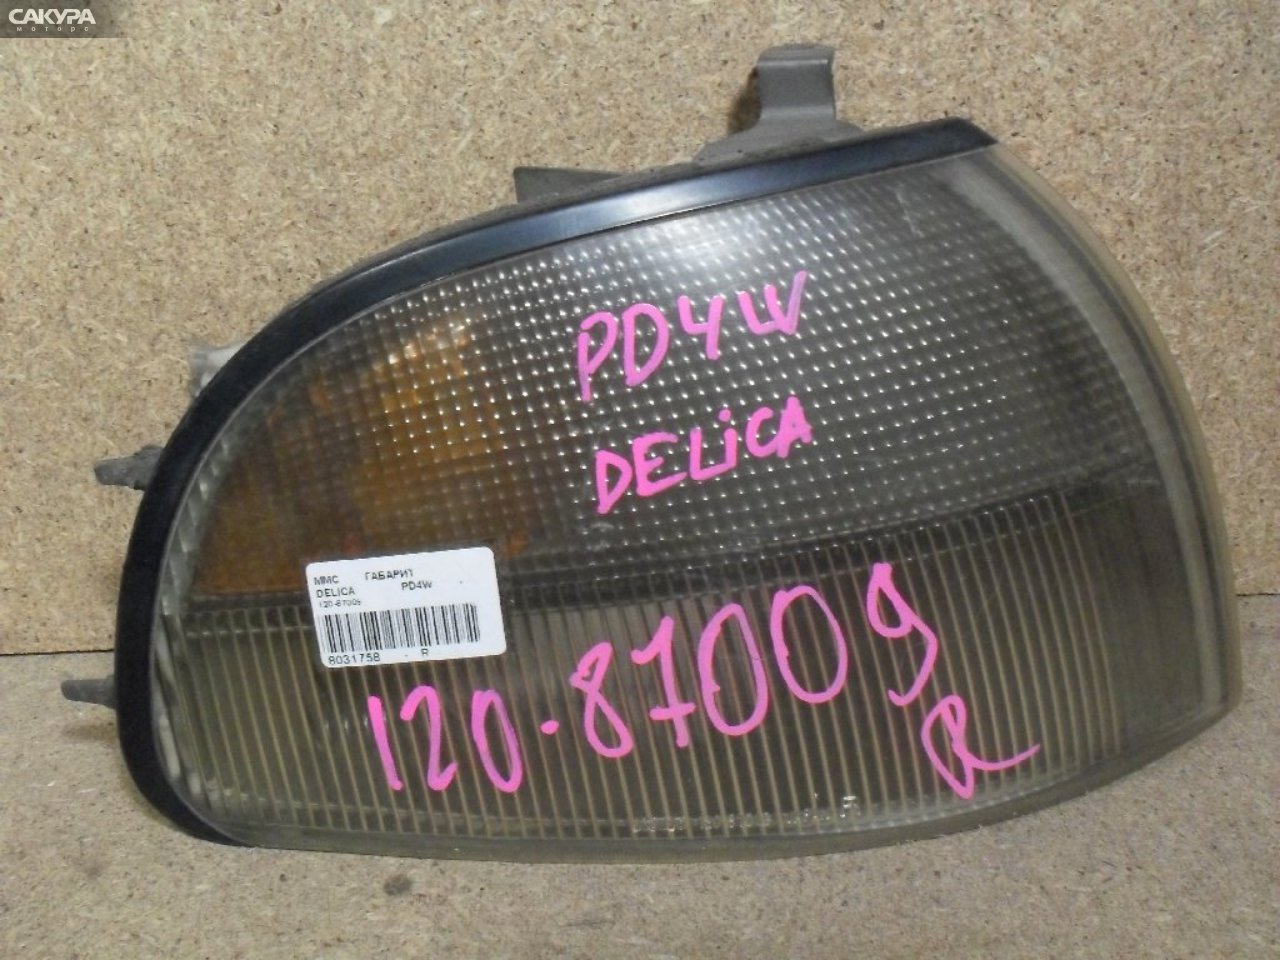 Поворотник правый Mitsubishi Delica PD4W 120-87009: купить в Сакура Абакан.